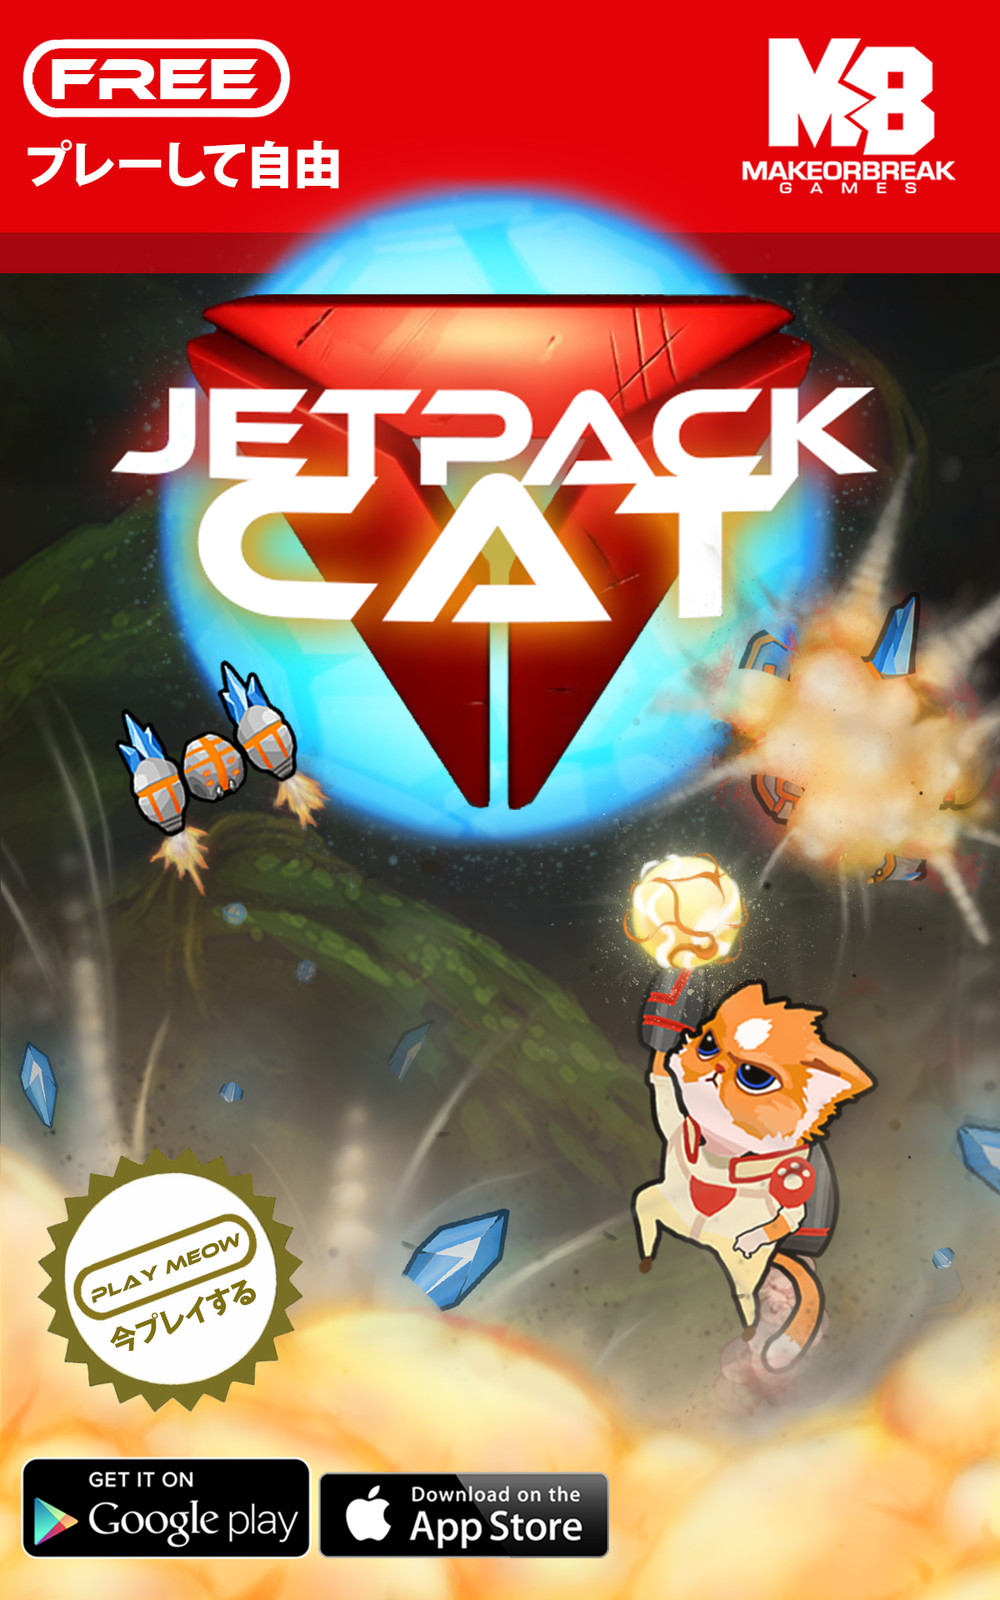 Jetpack Cat marketing images